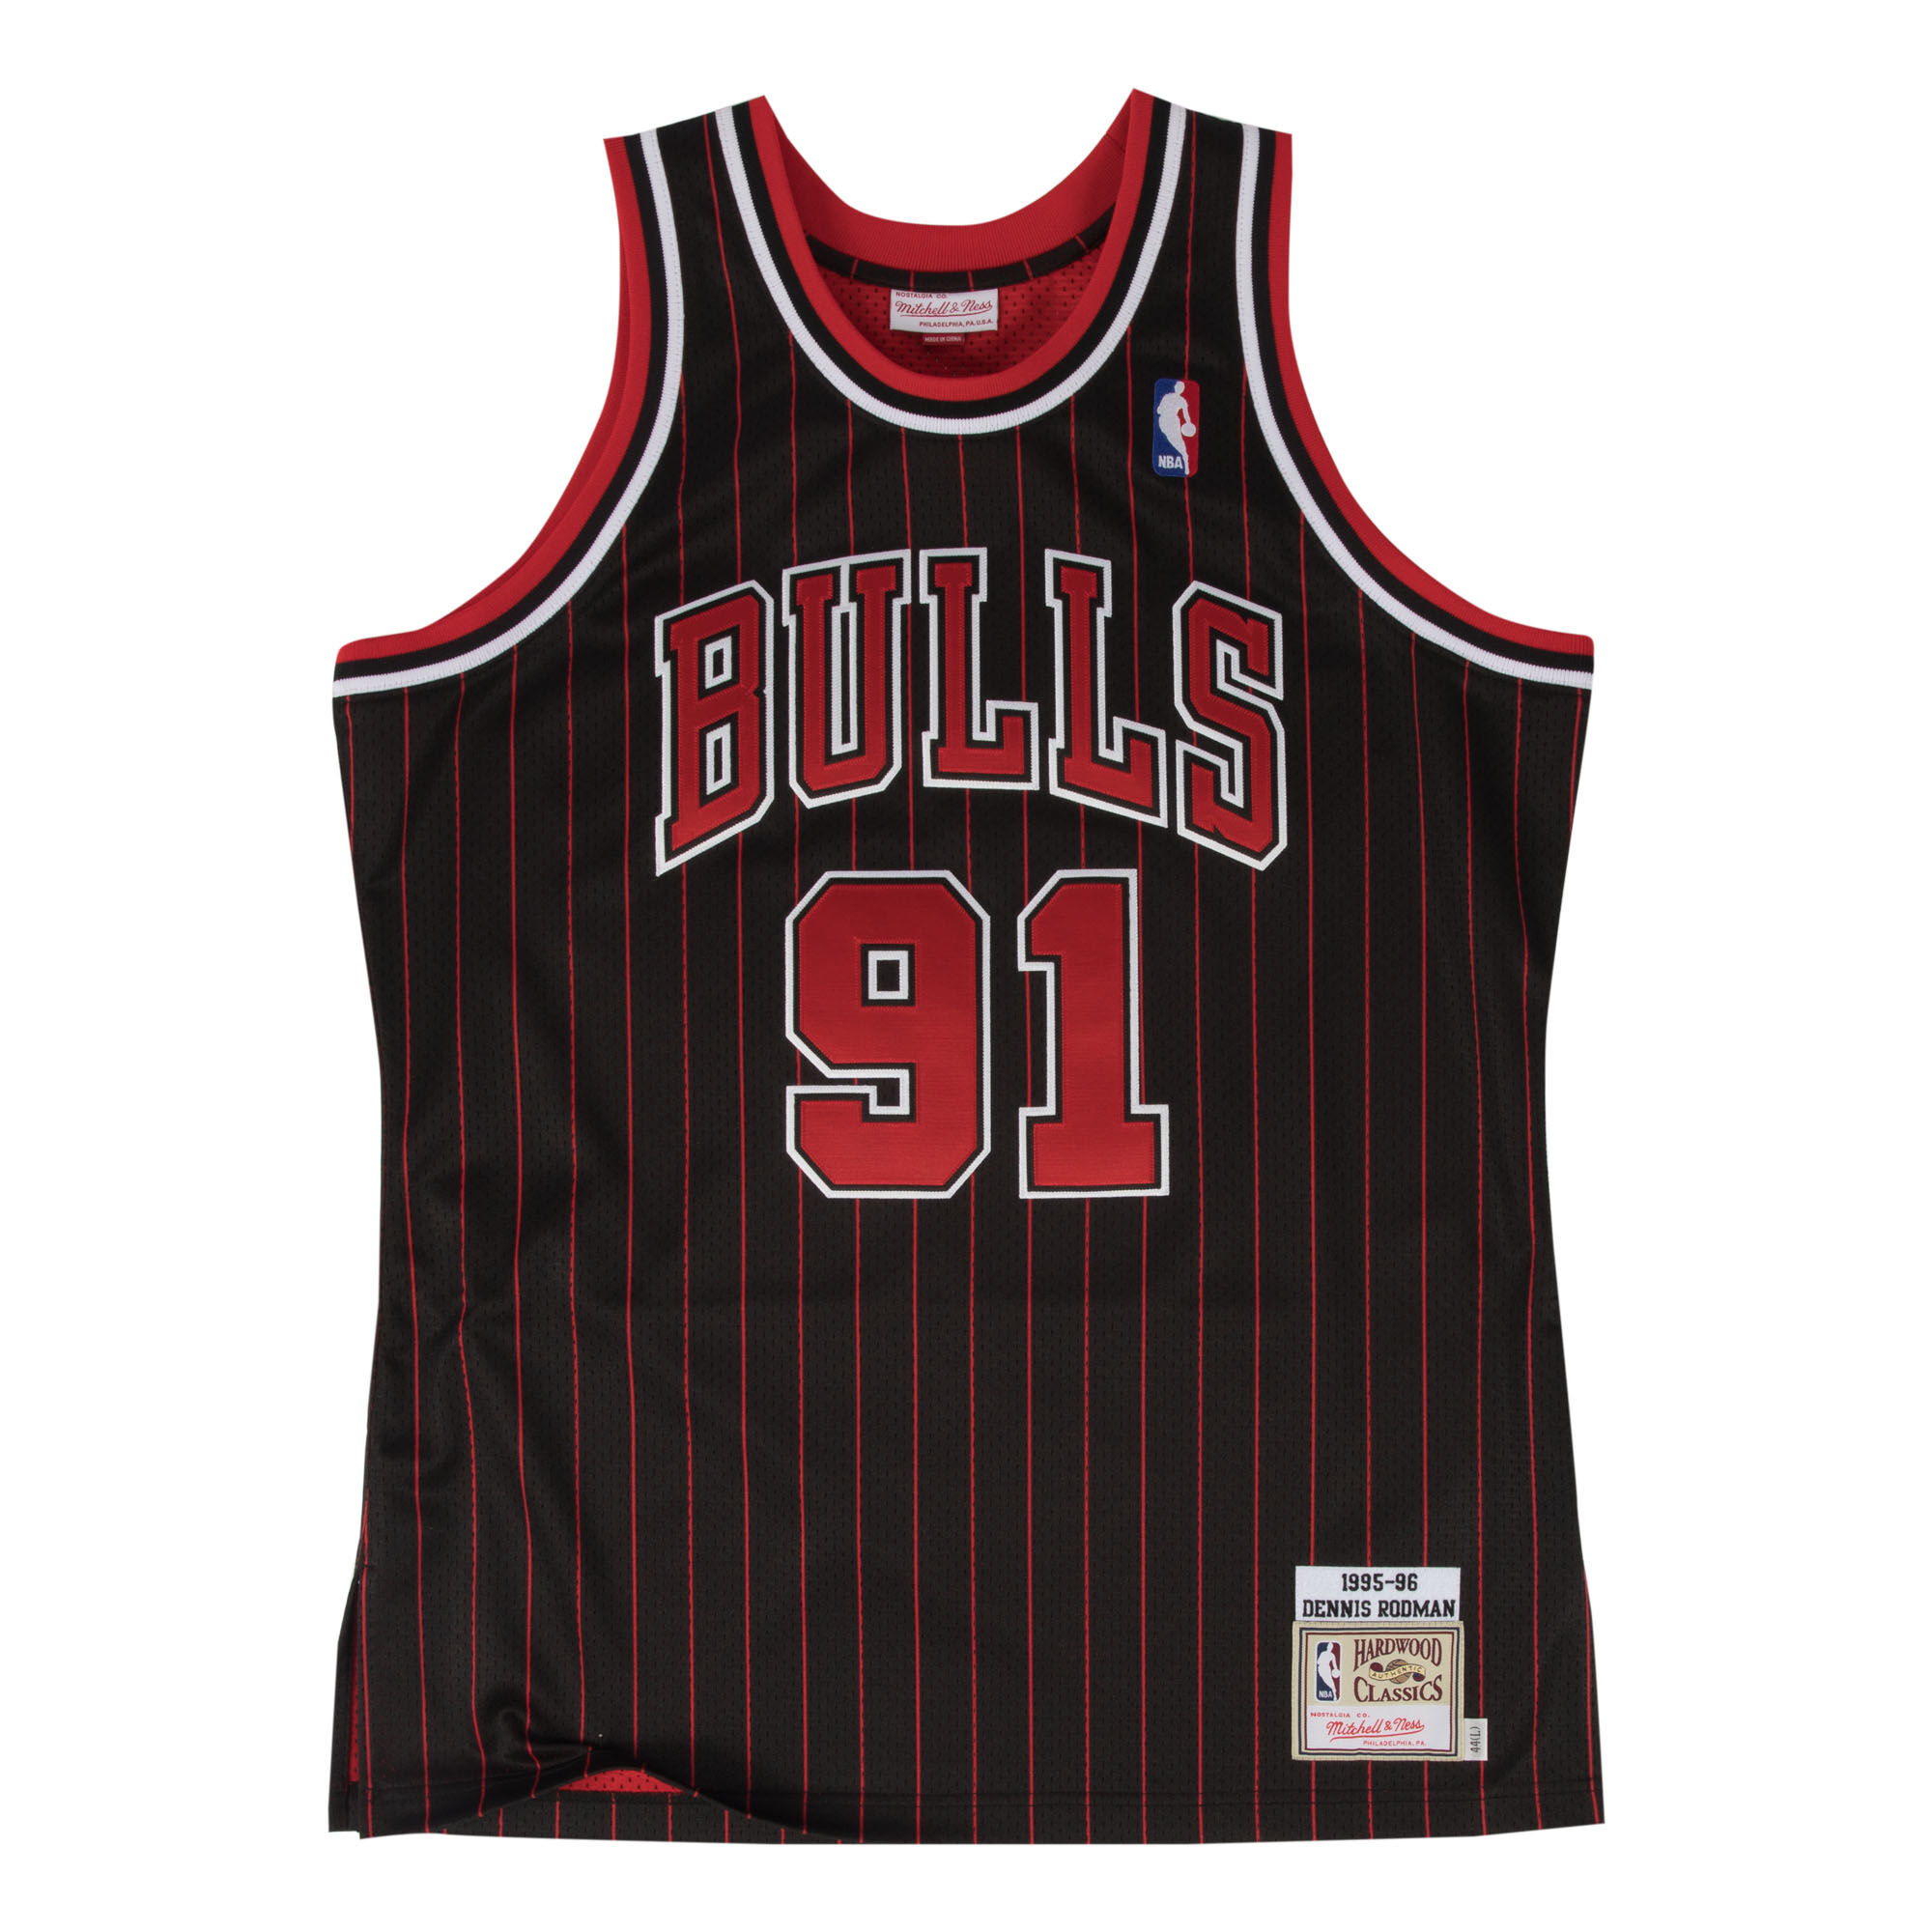 Dennis Rodman Jersey 1995-96 Chicago Bulls